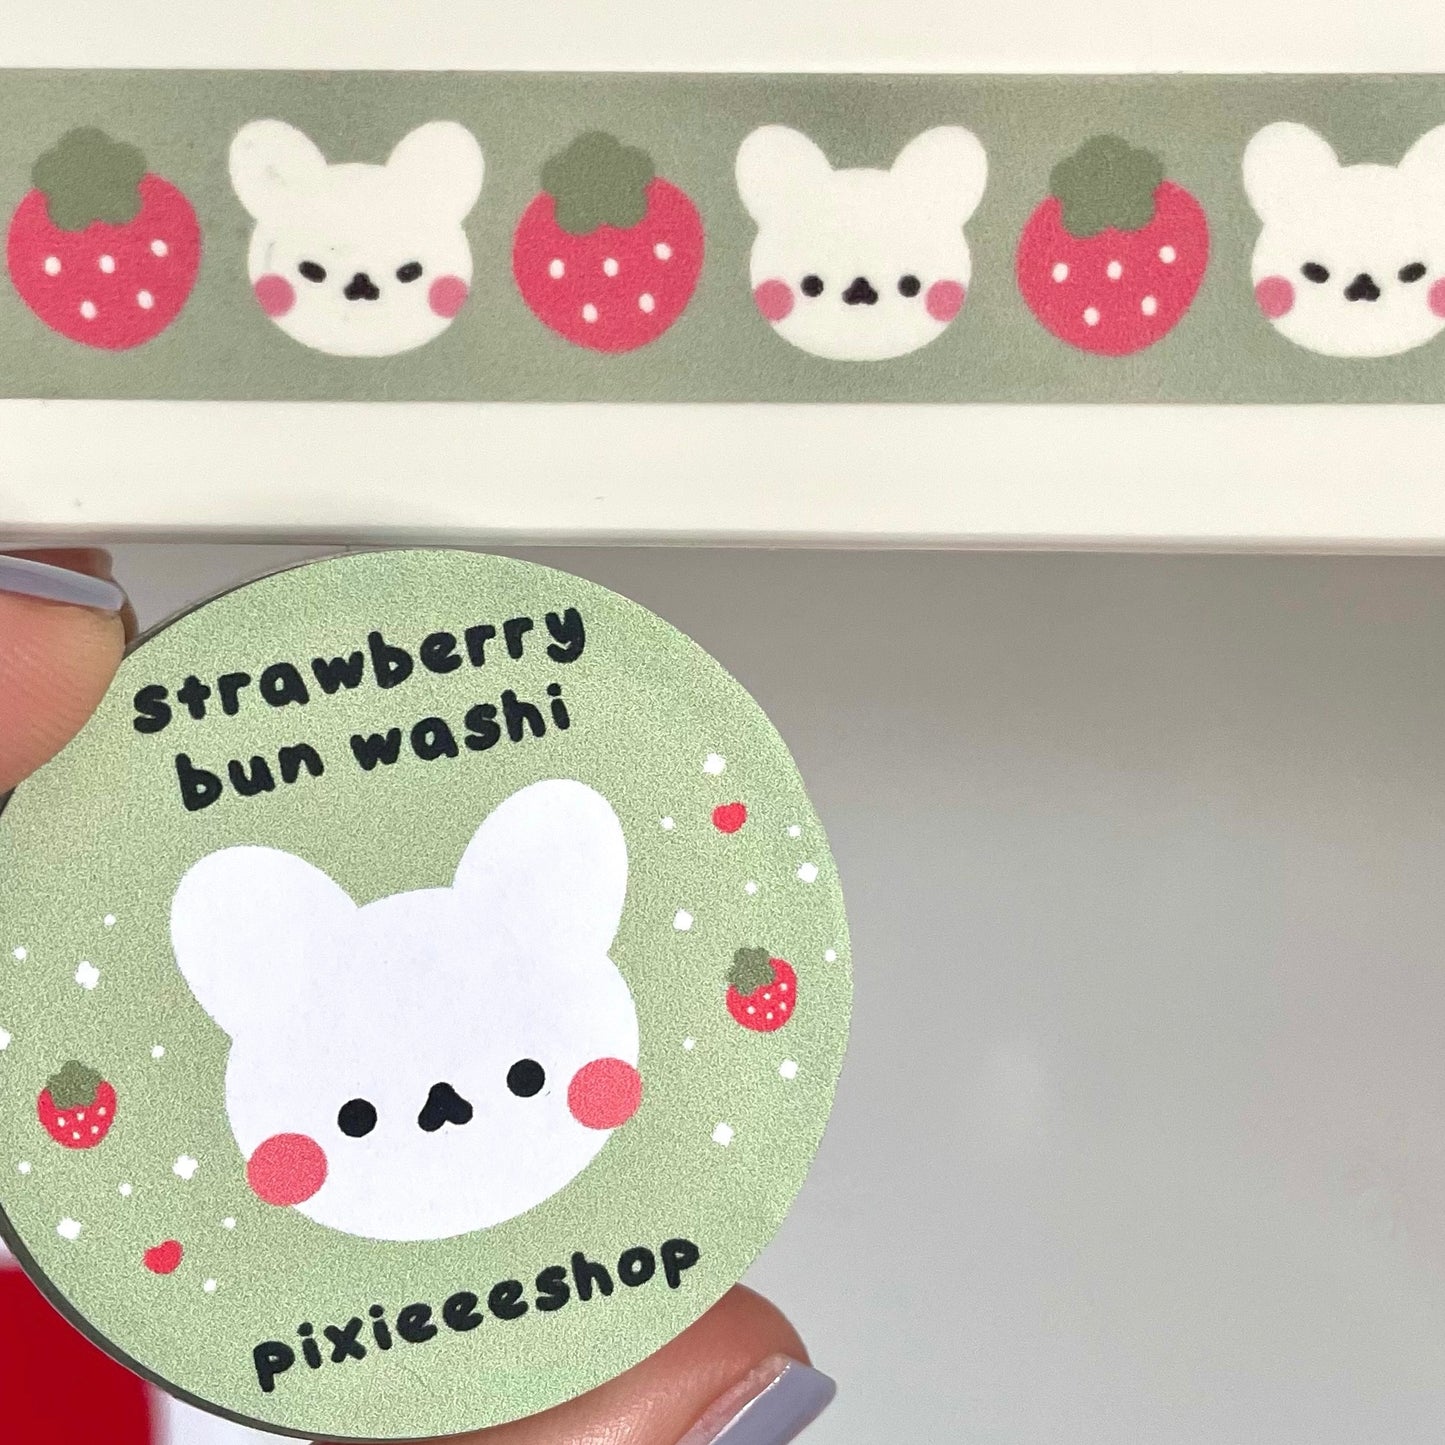 Strawberry Bunny Washi Tape